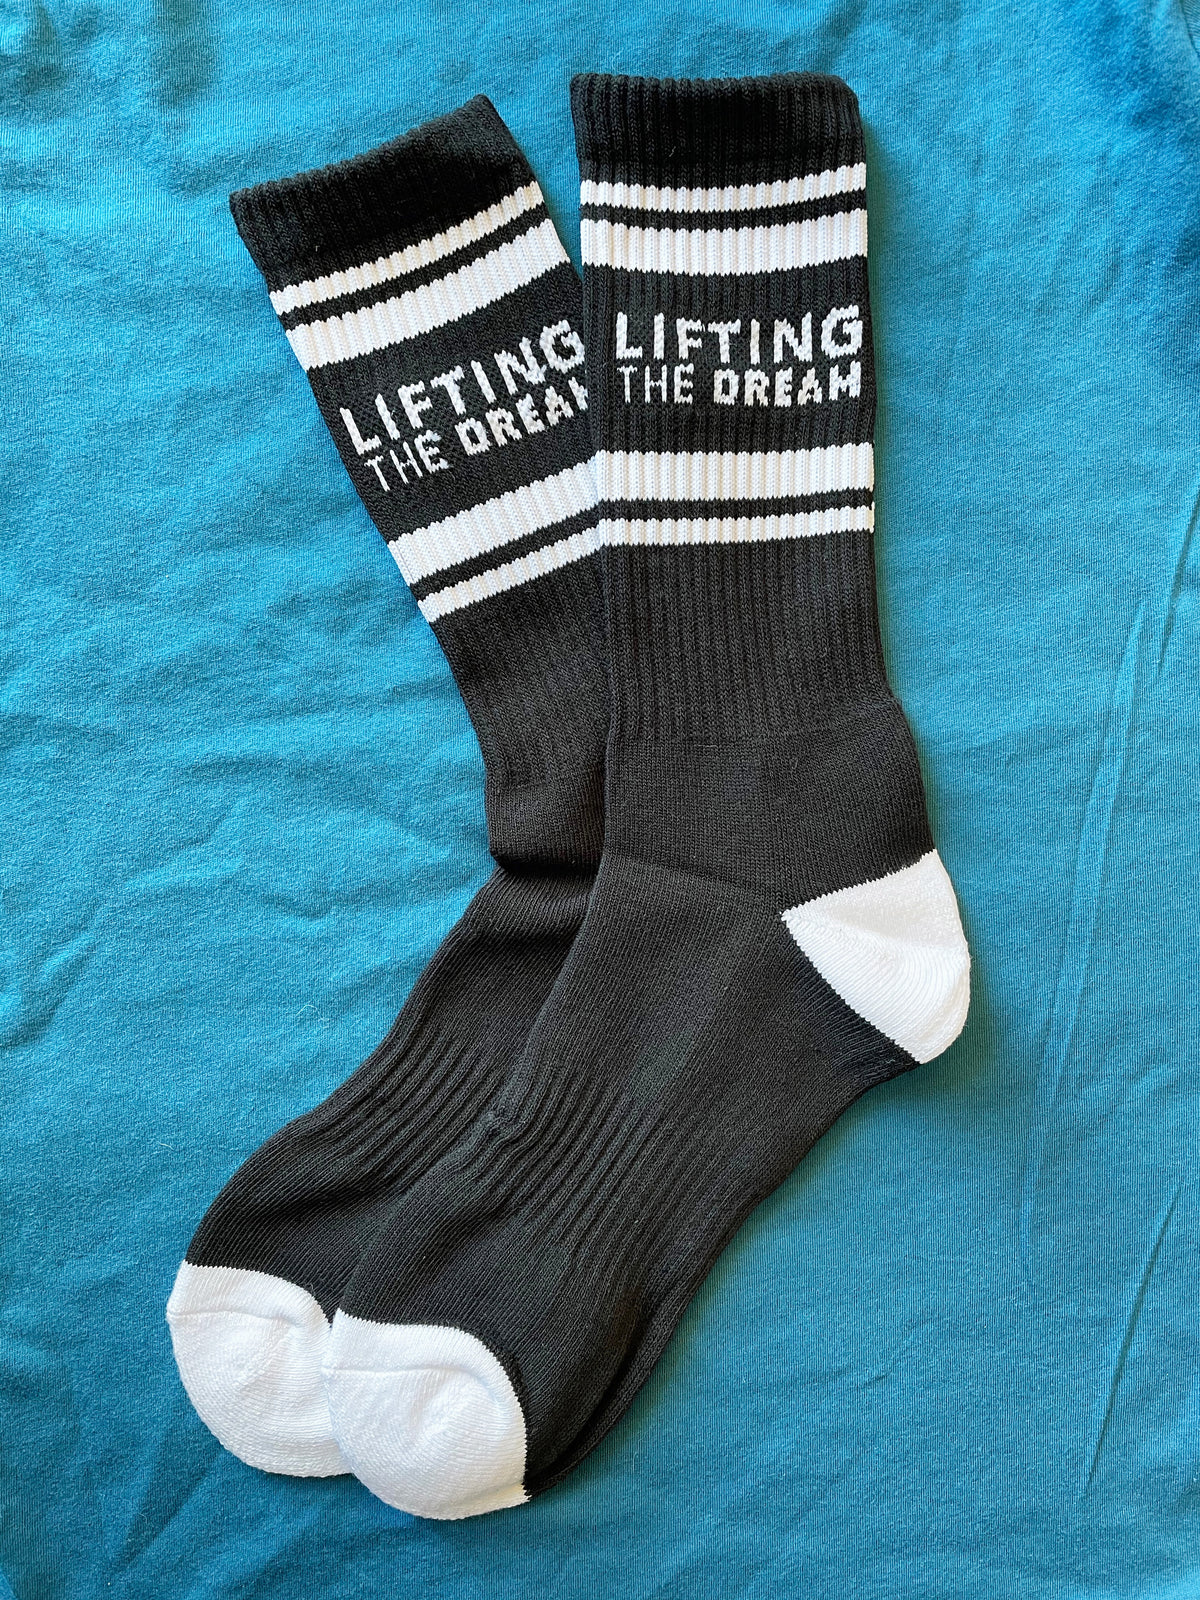 Lifting the Dream Socks